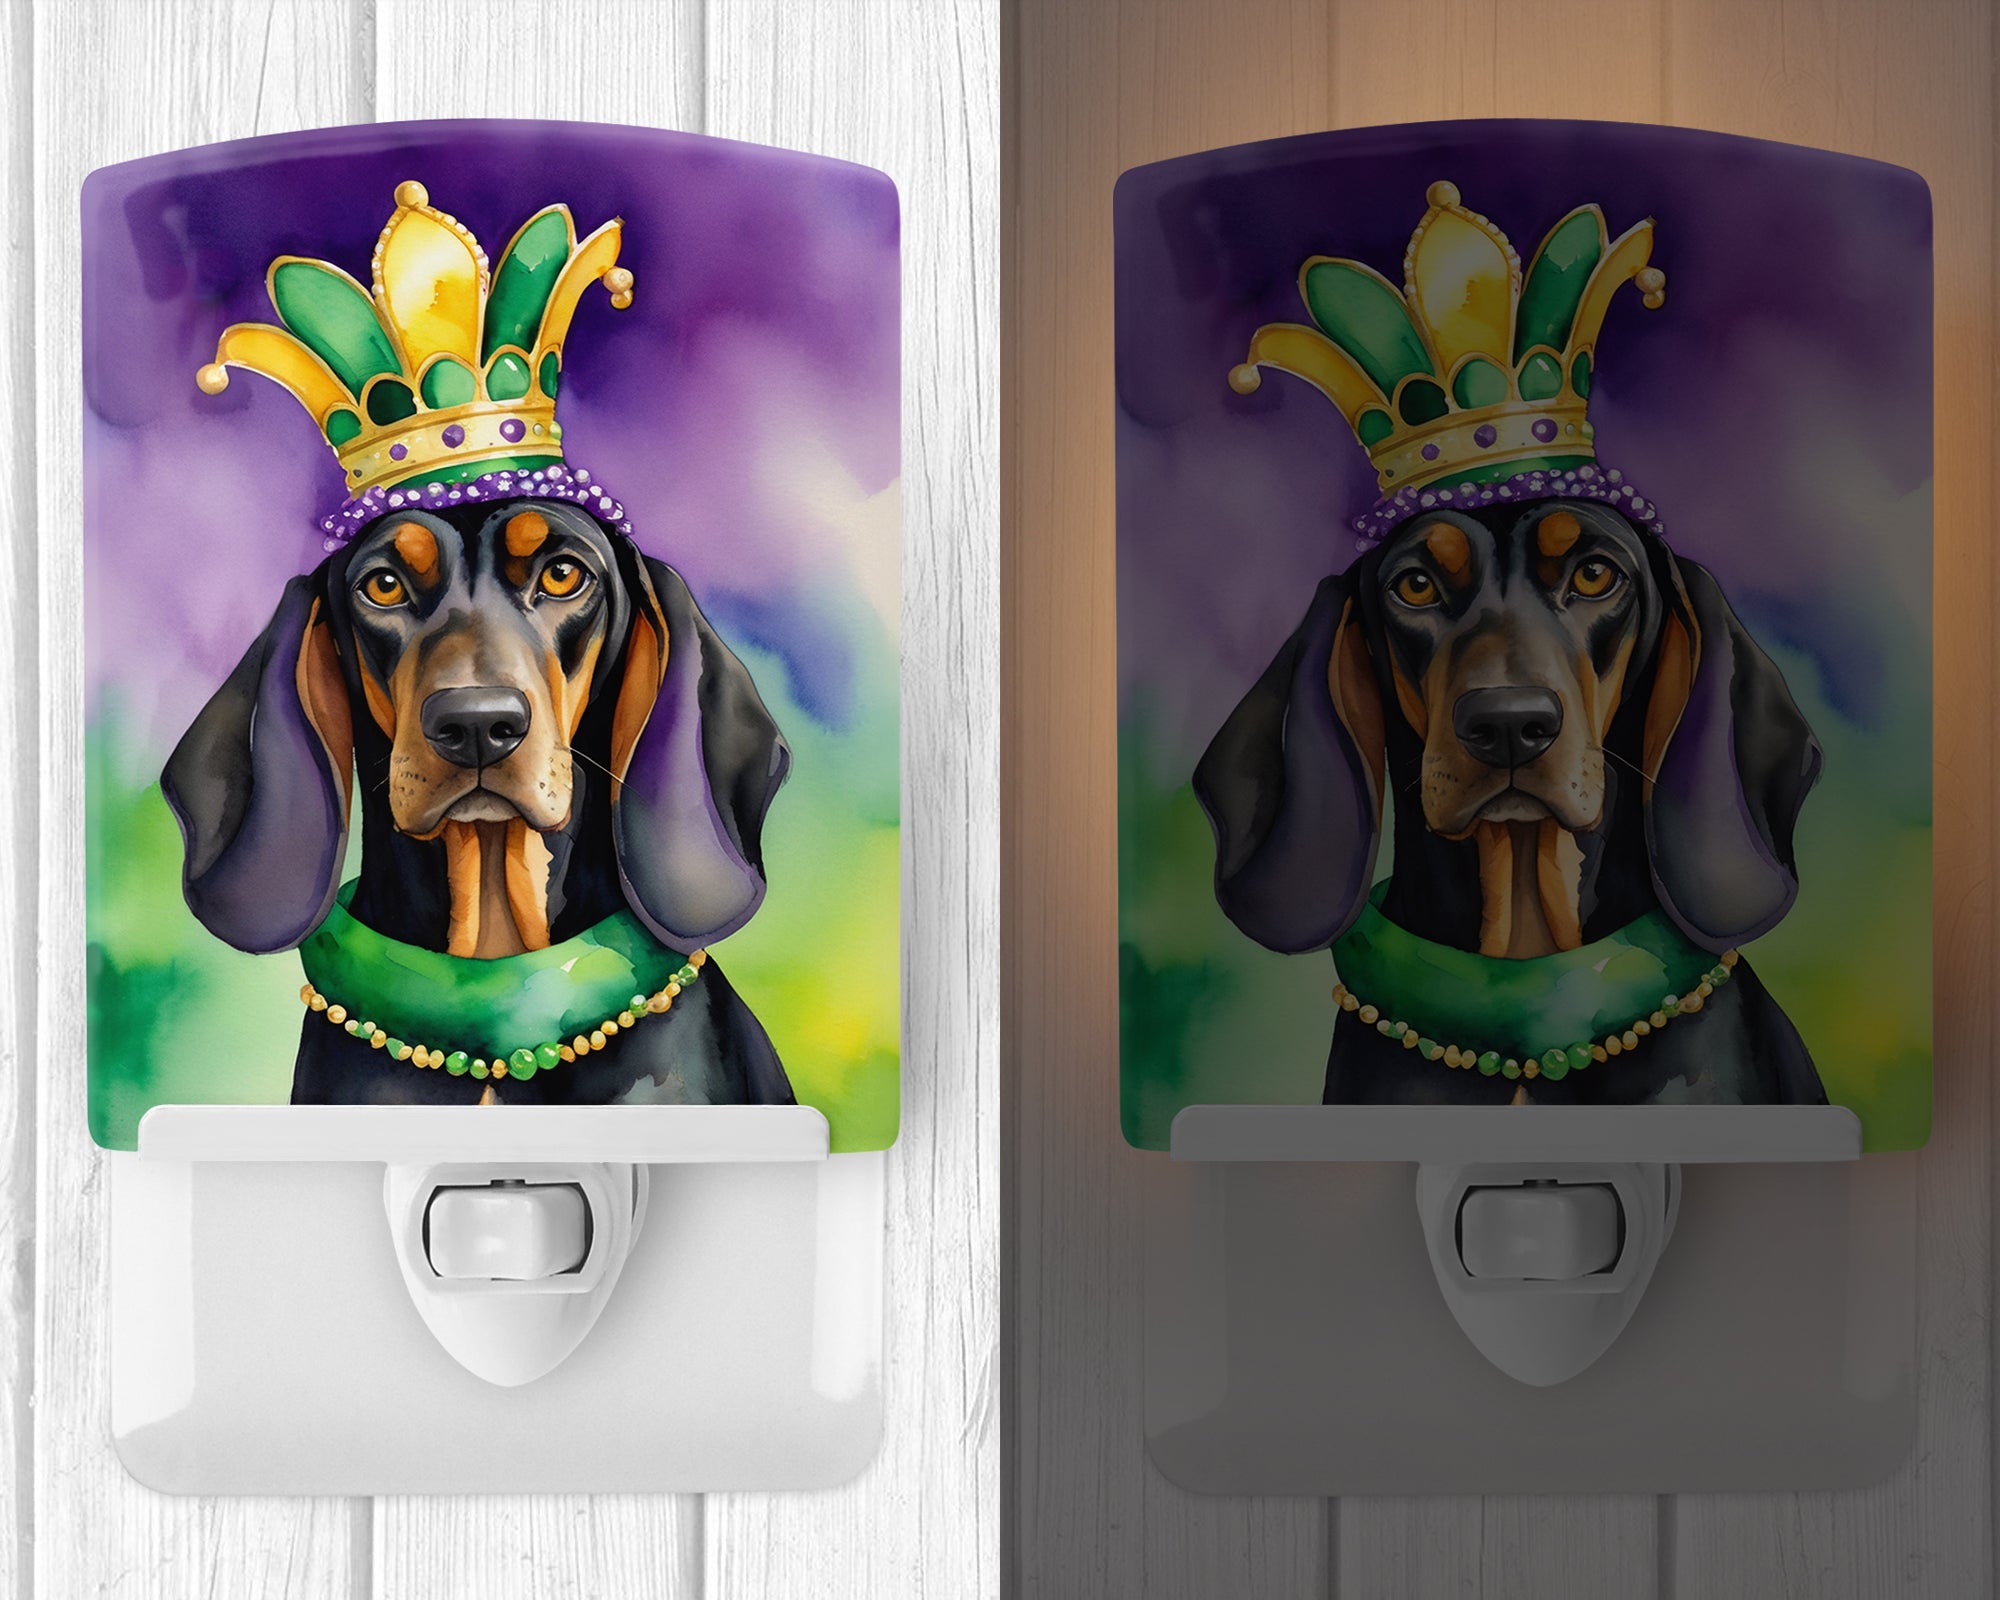 Buy this Black and Tan Coonhound King of Mardi Gras Ceramic Night Light